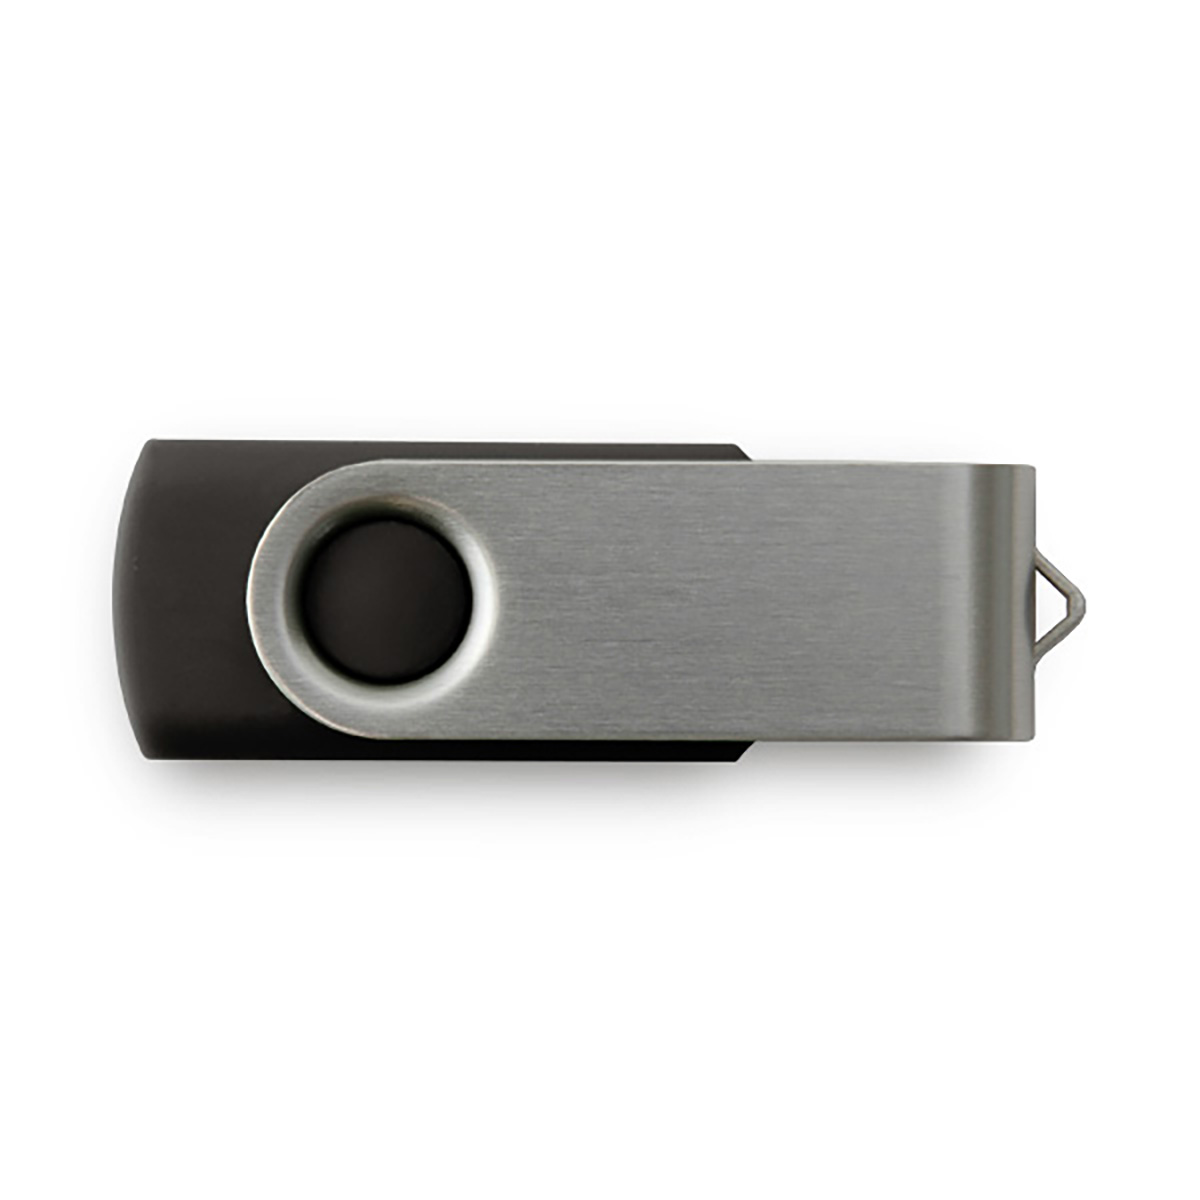 Black Northlake QuickShip Swivel USB Flash Drive - 8 GB 